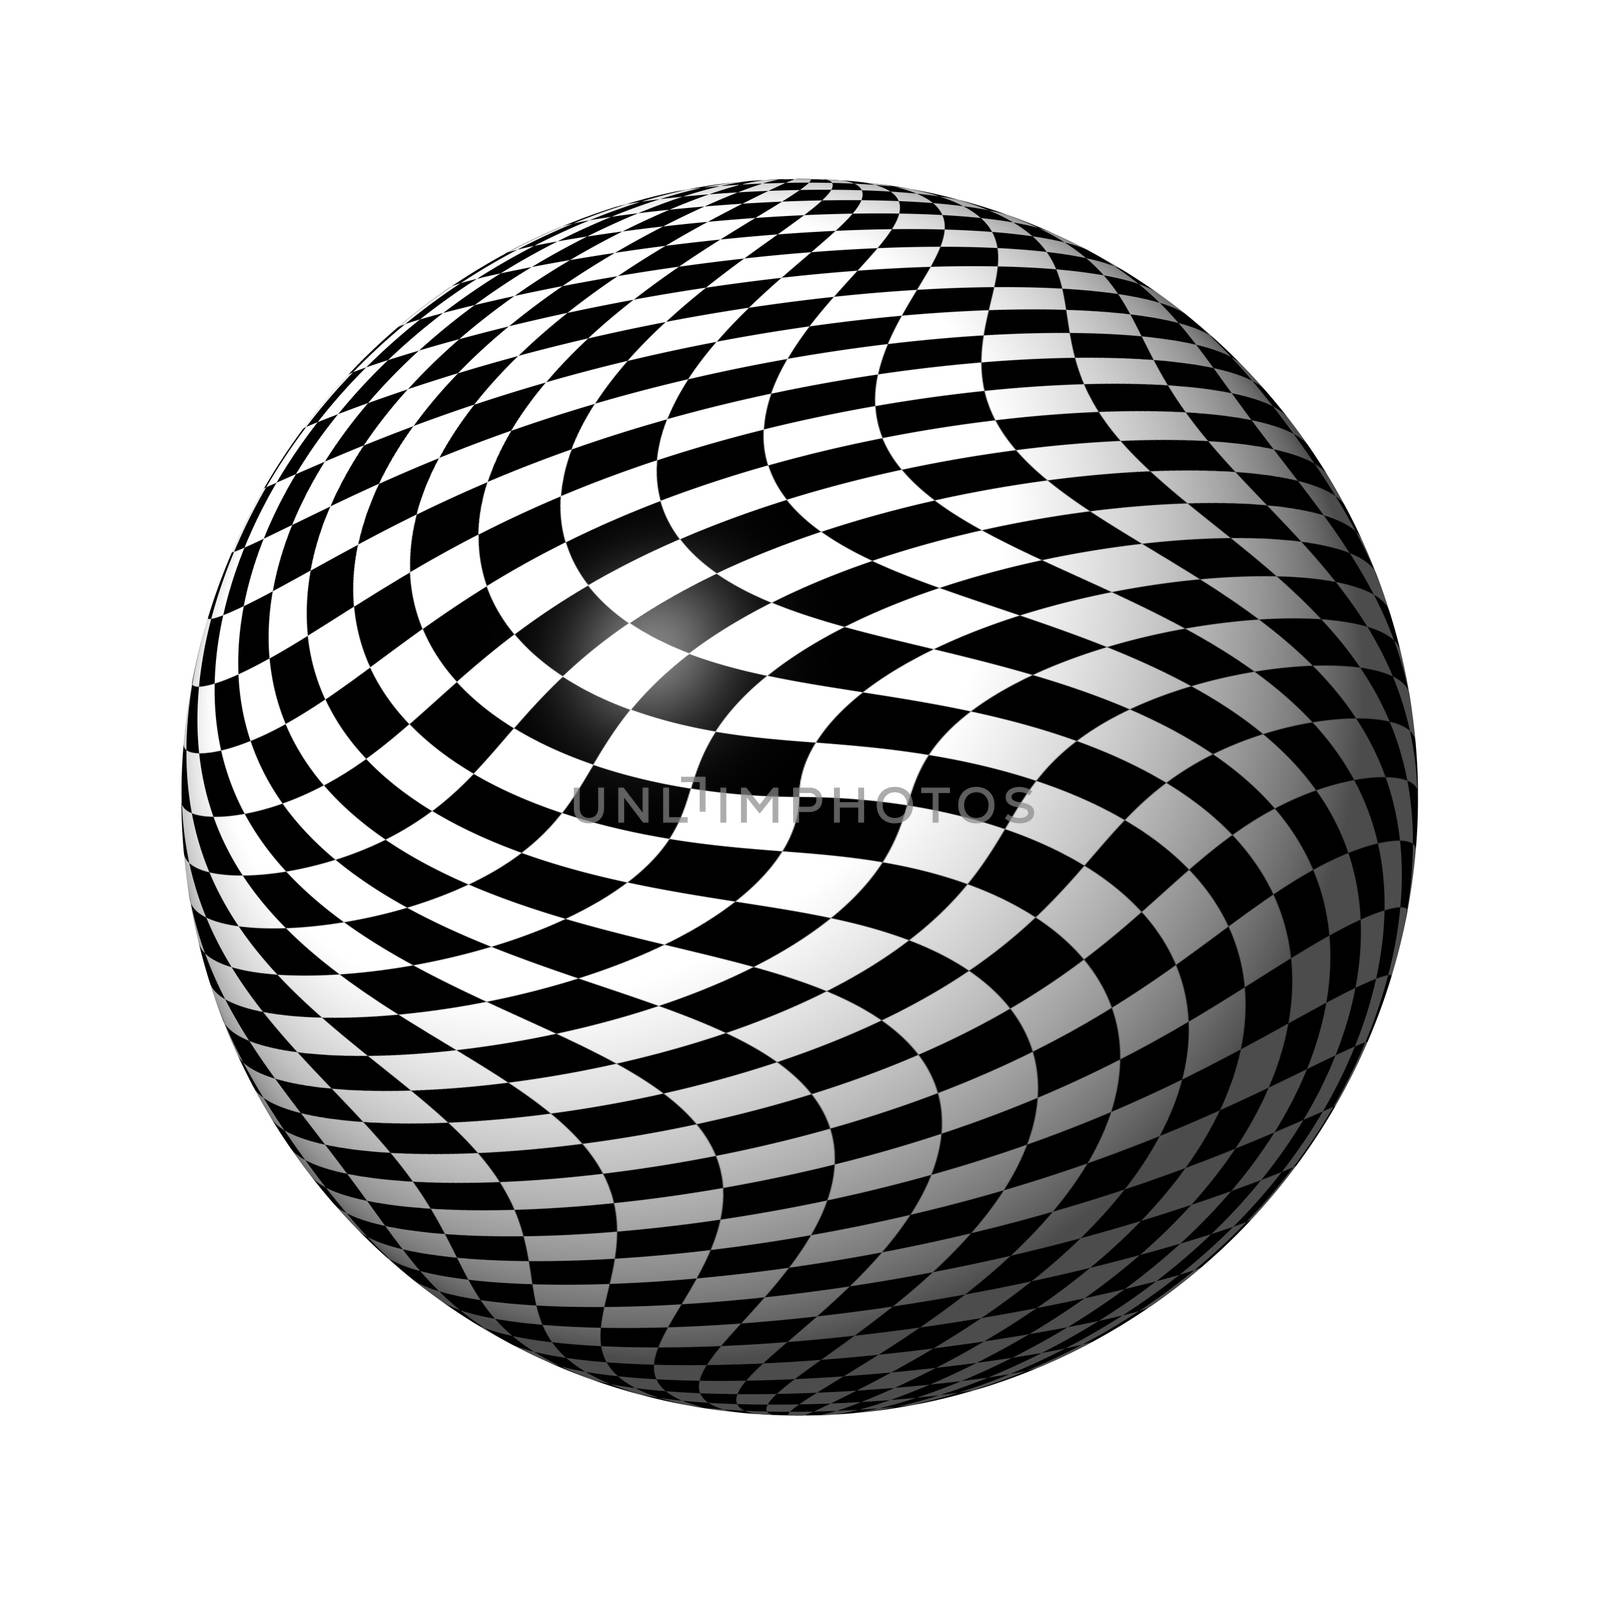 Chessboard Globe by hlehnerer